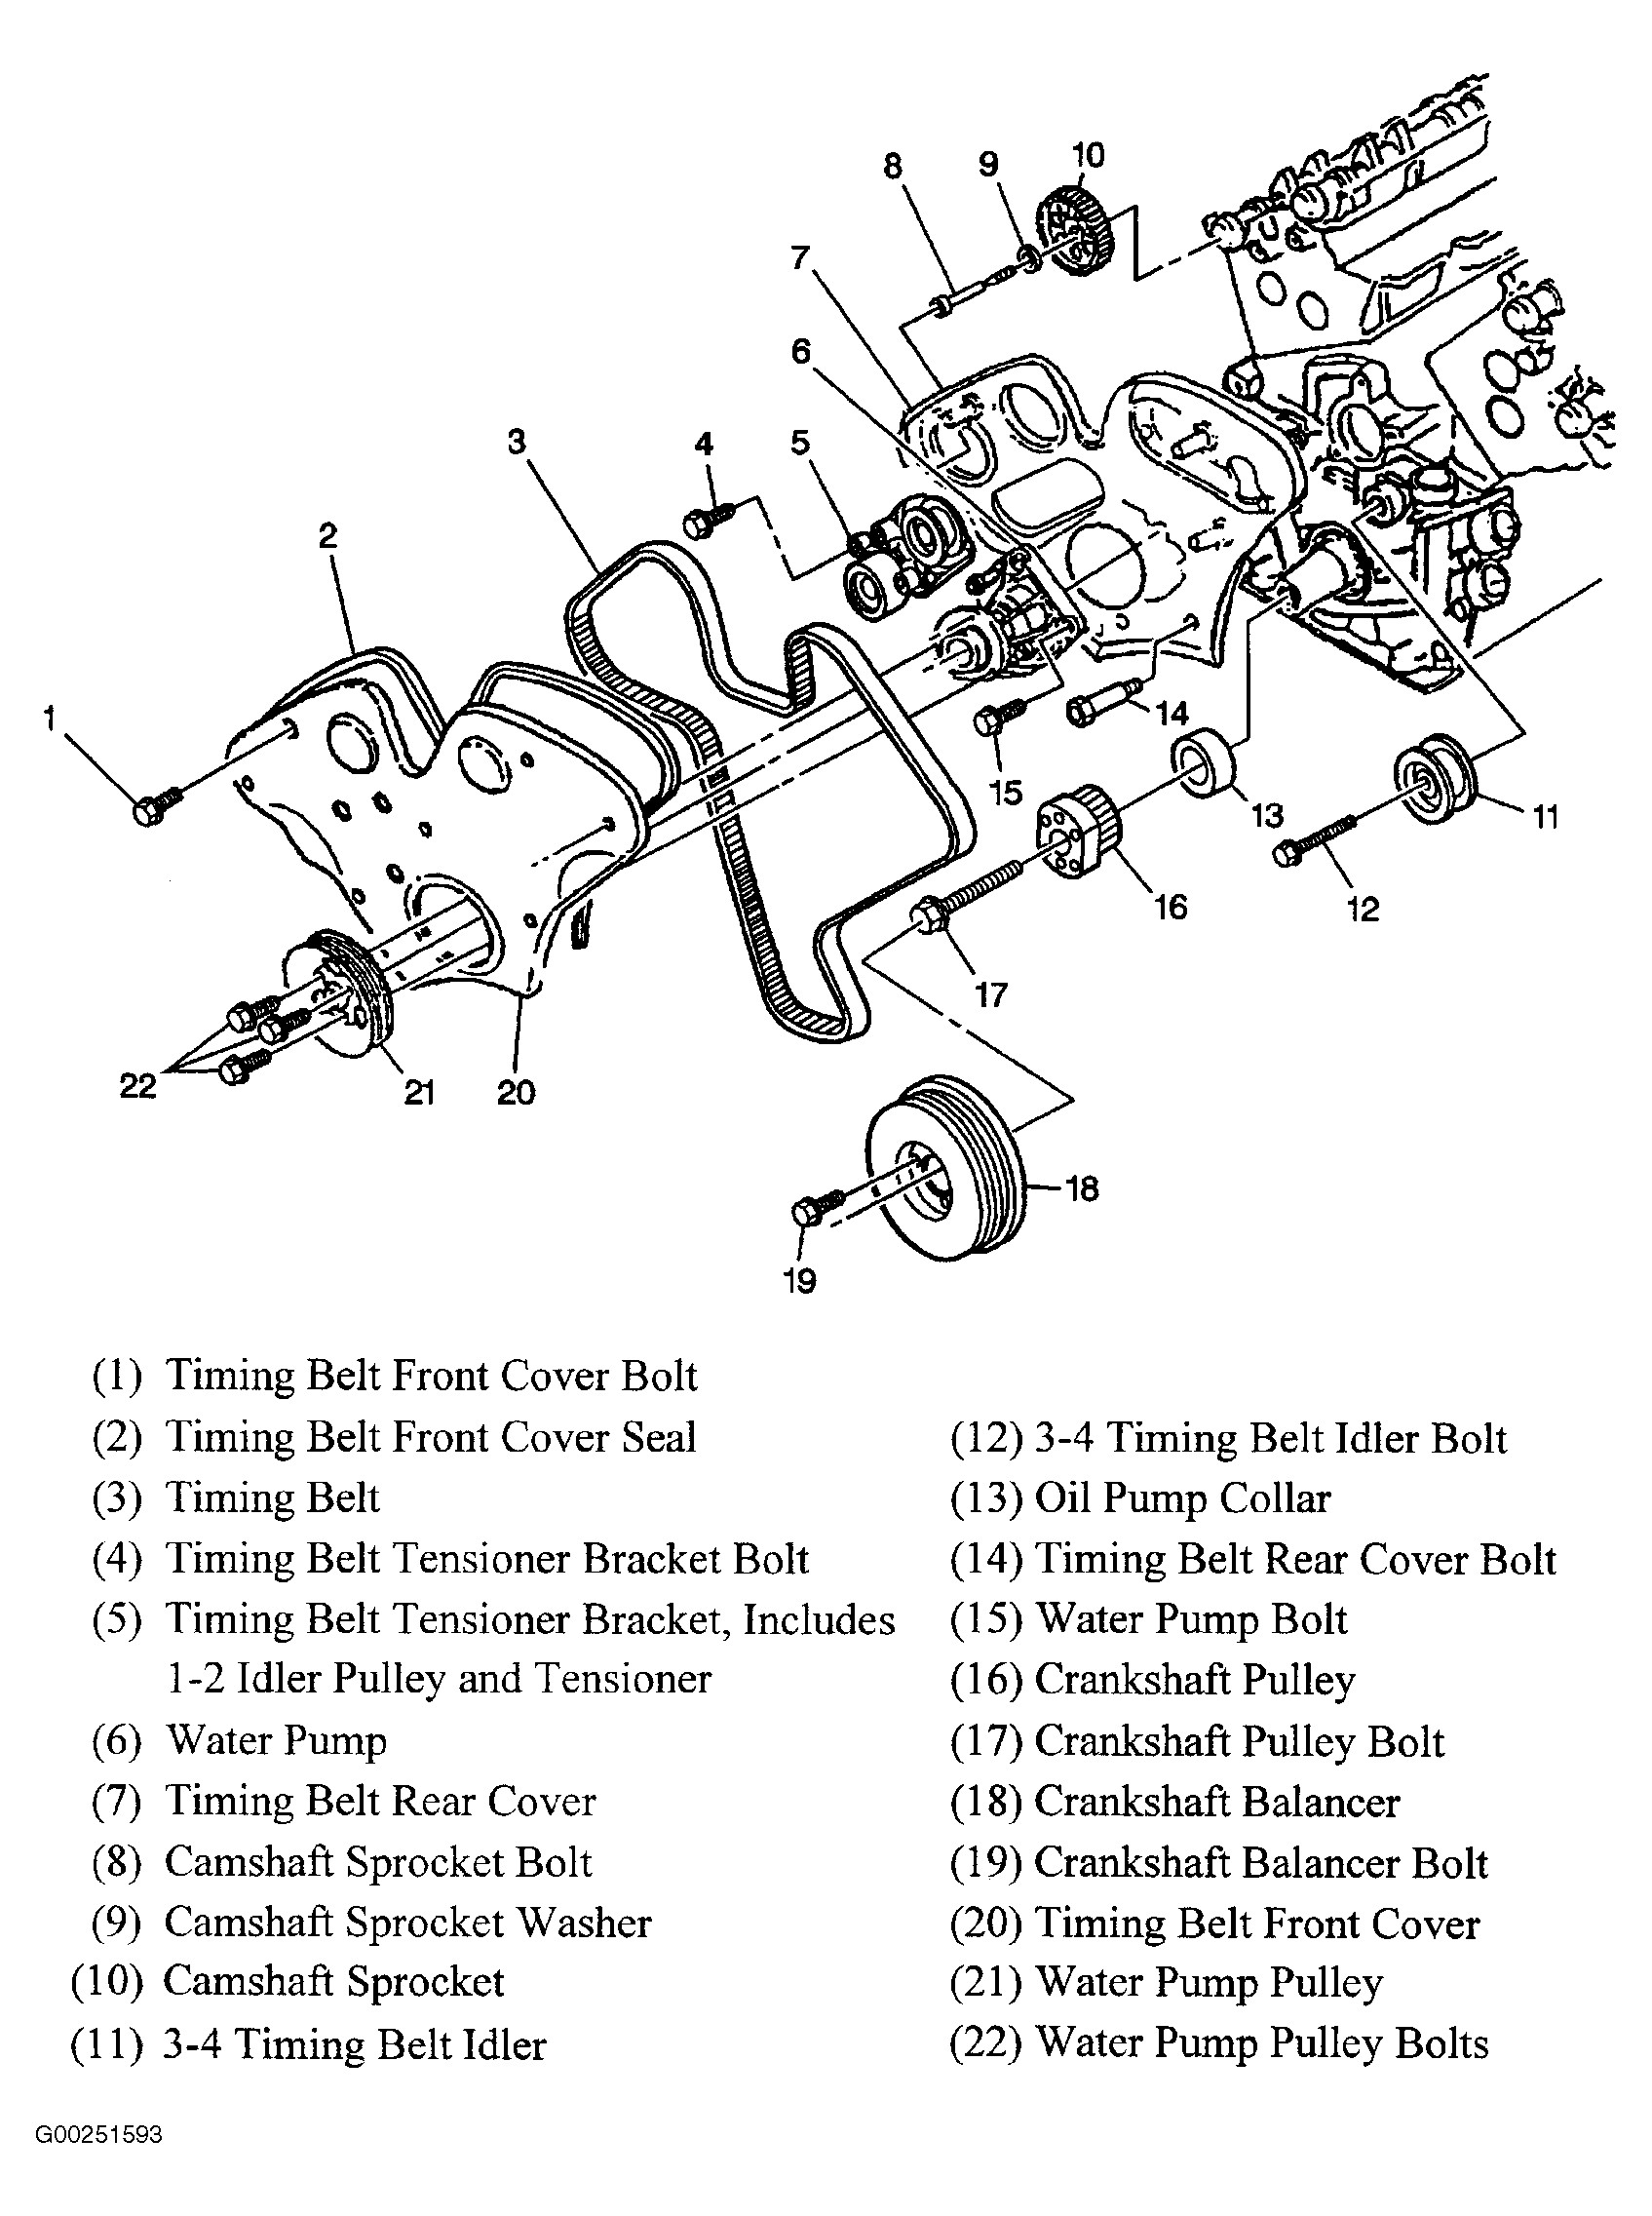 Car Engine Diagram Parts 2003 Cadillac Cts Serpentine Belt Diagram Auto Of Car Engine Diagram Parts